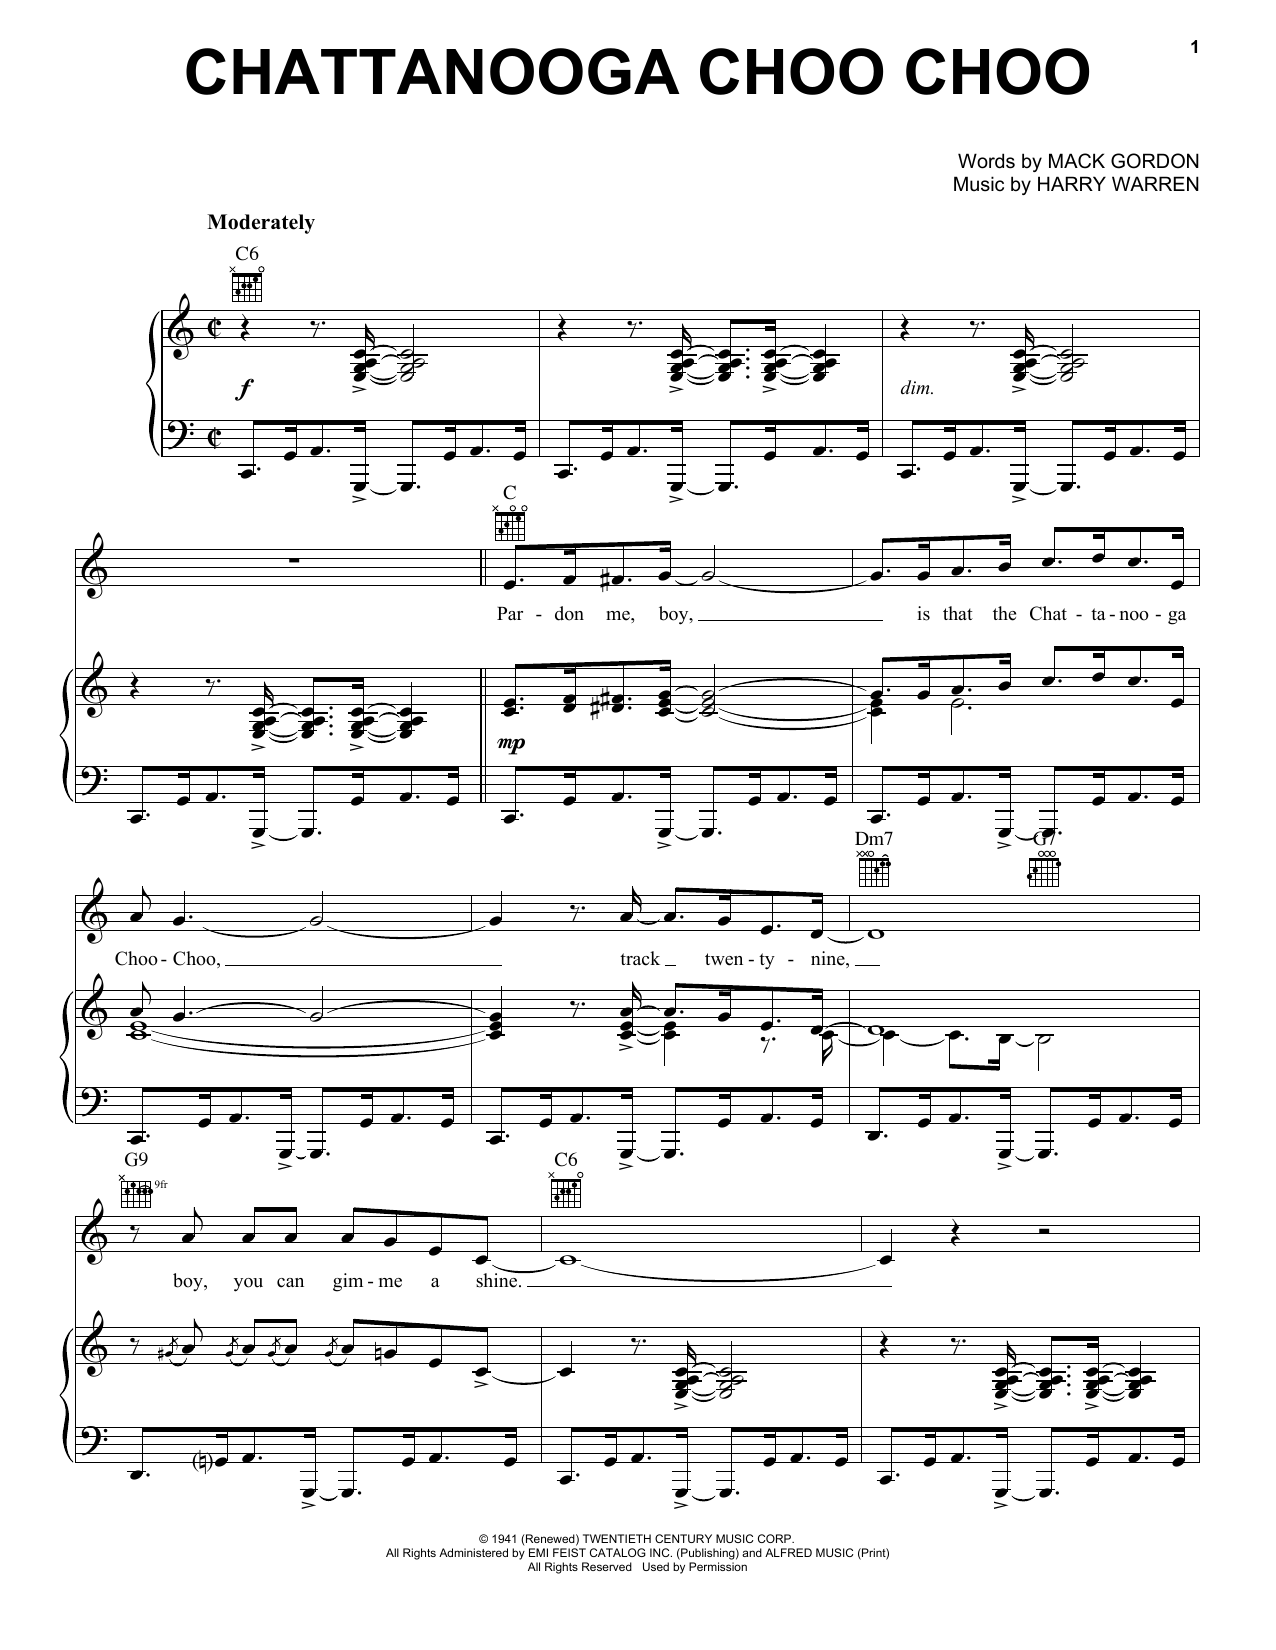 Glenn Miller Chattanooga Choo Choo Sheet Music Notes & Chords for Easy Piano - Download or Print PDF